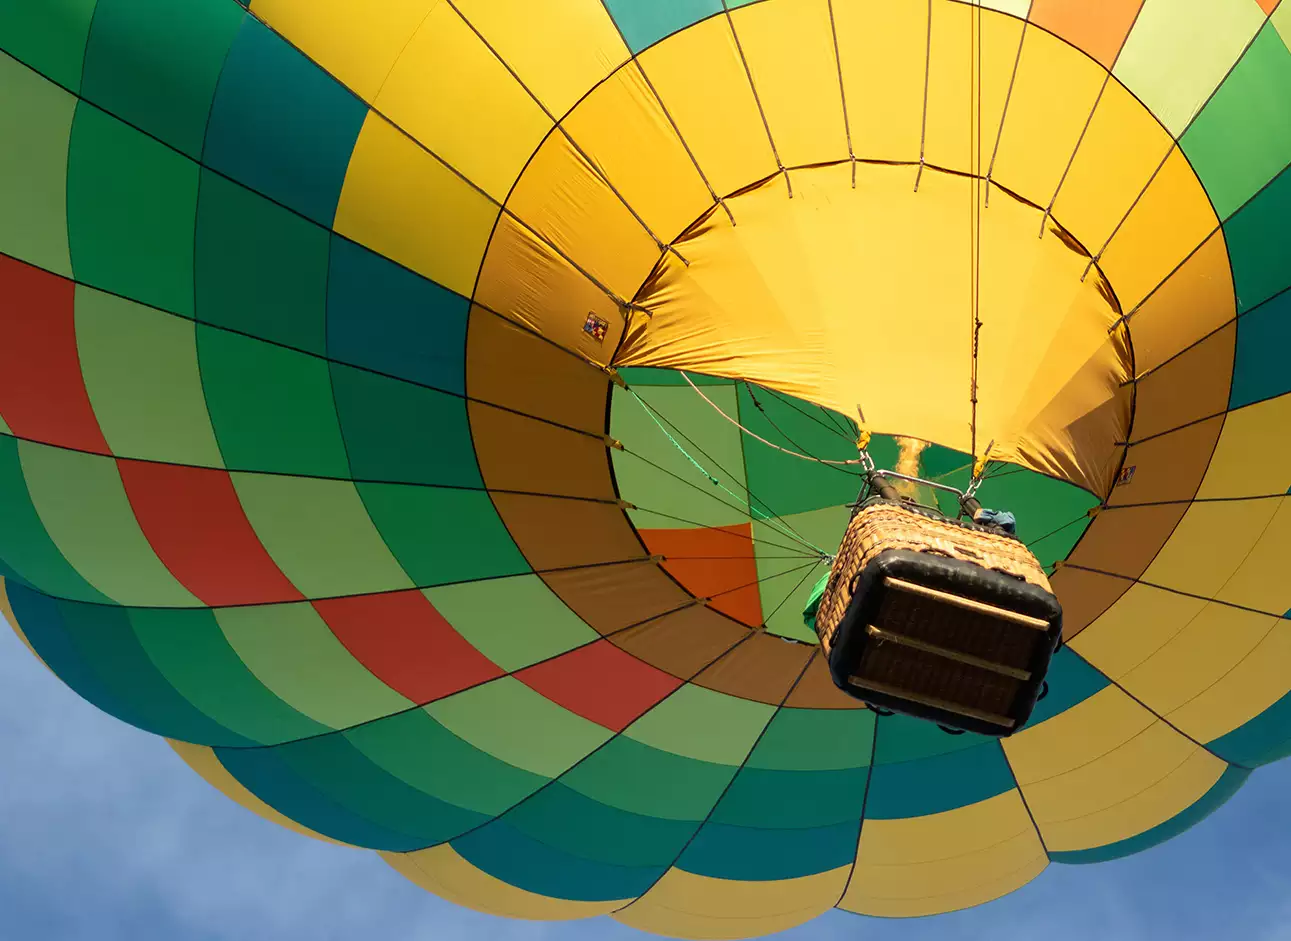 Hot Air Ballooning - Experience breathtaking views on exhilarating hot air balloon rides